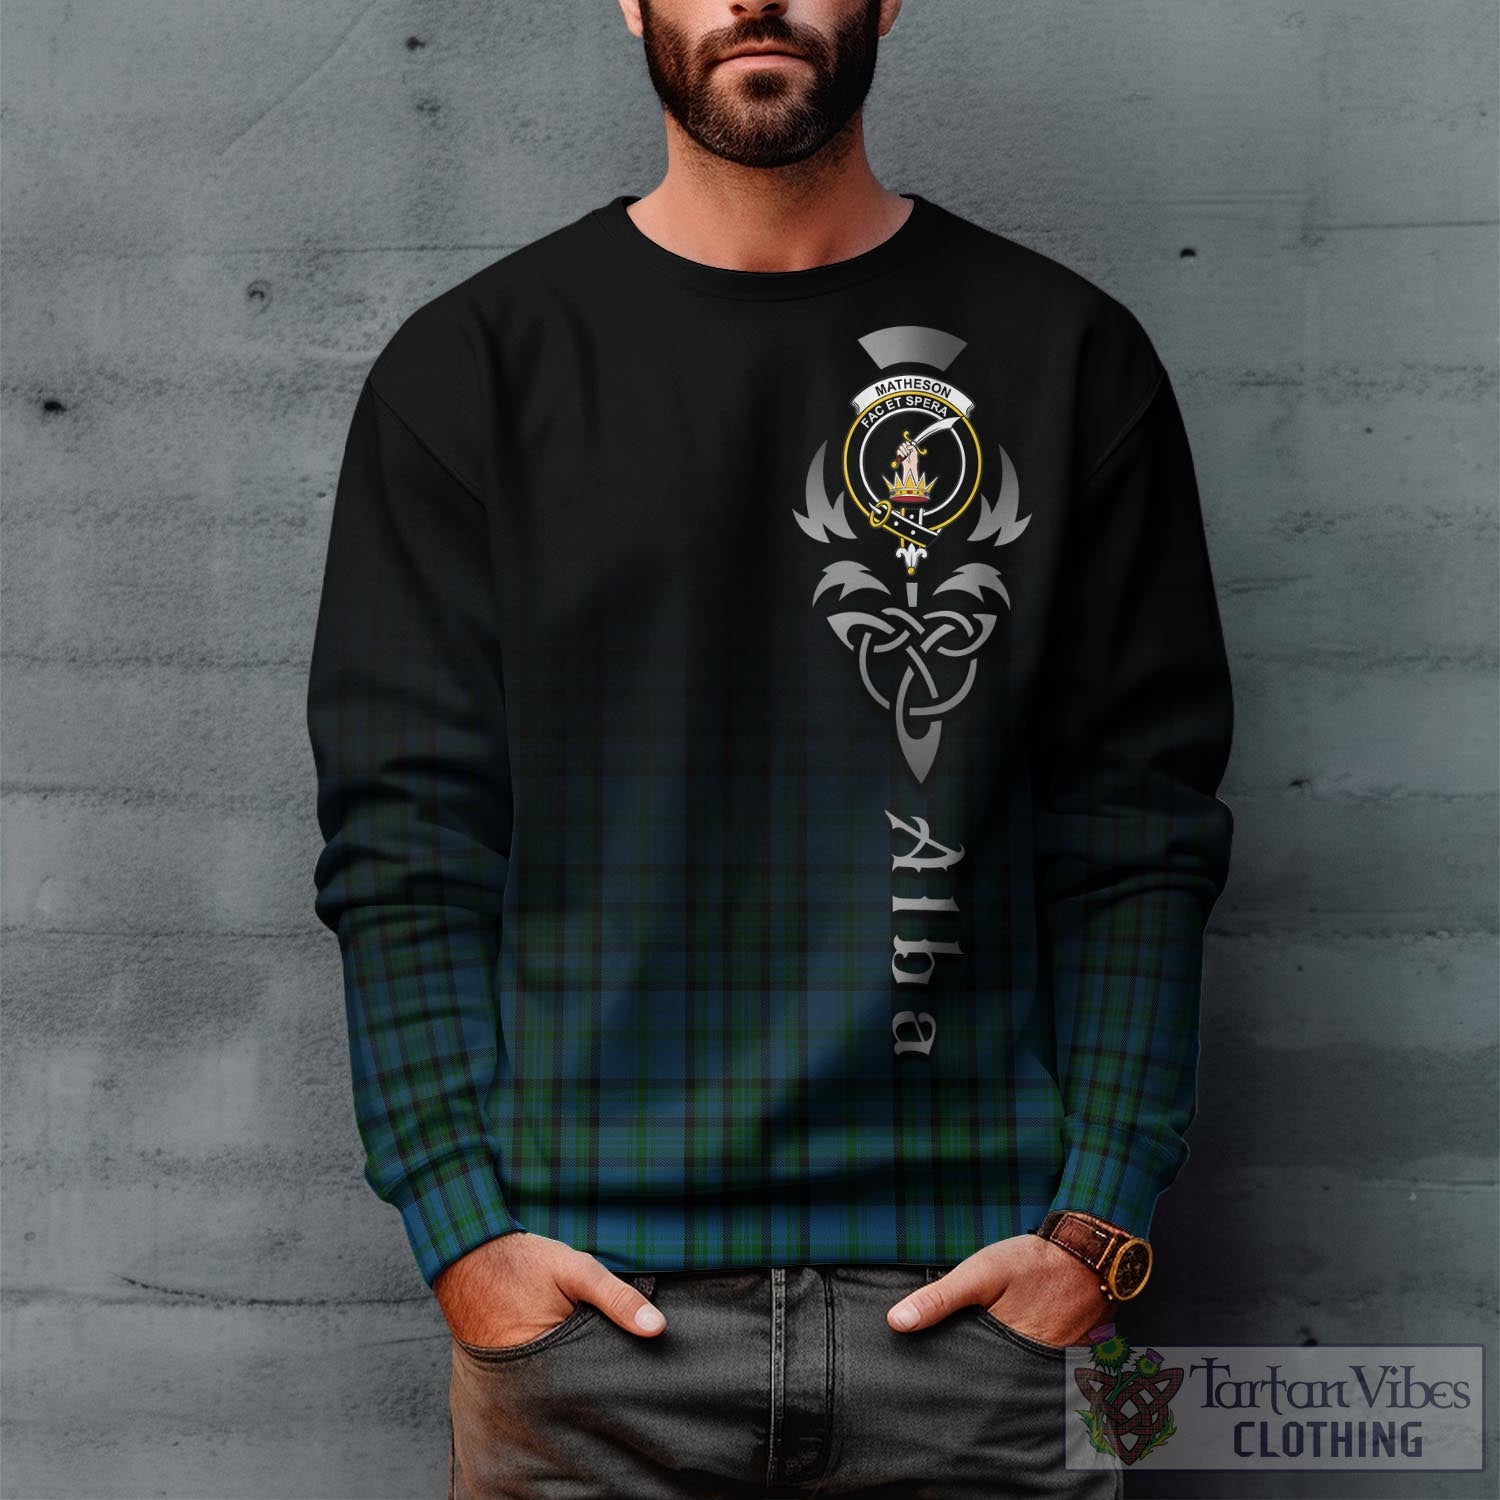 Tartan Vibes Clothing Matheson Hunting Tartan Sweatshirt Featuring Alba Gu Brath Family Crest Celtic Inspired